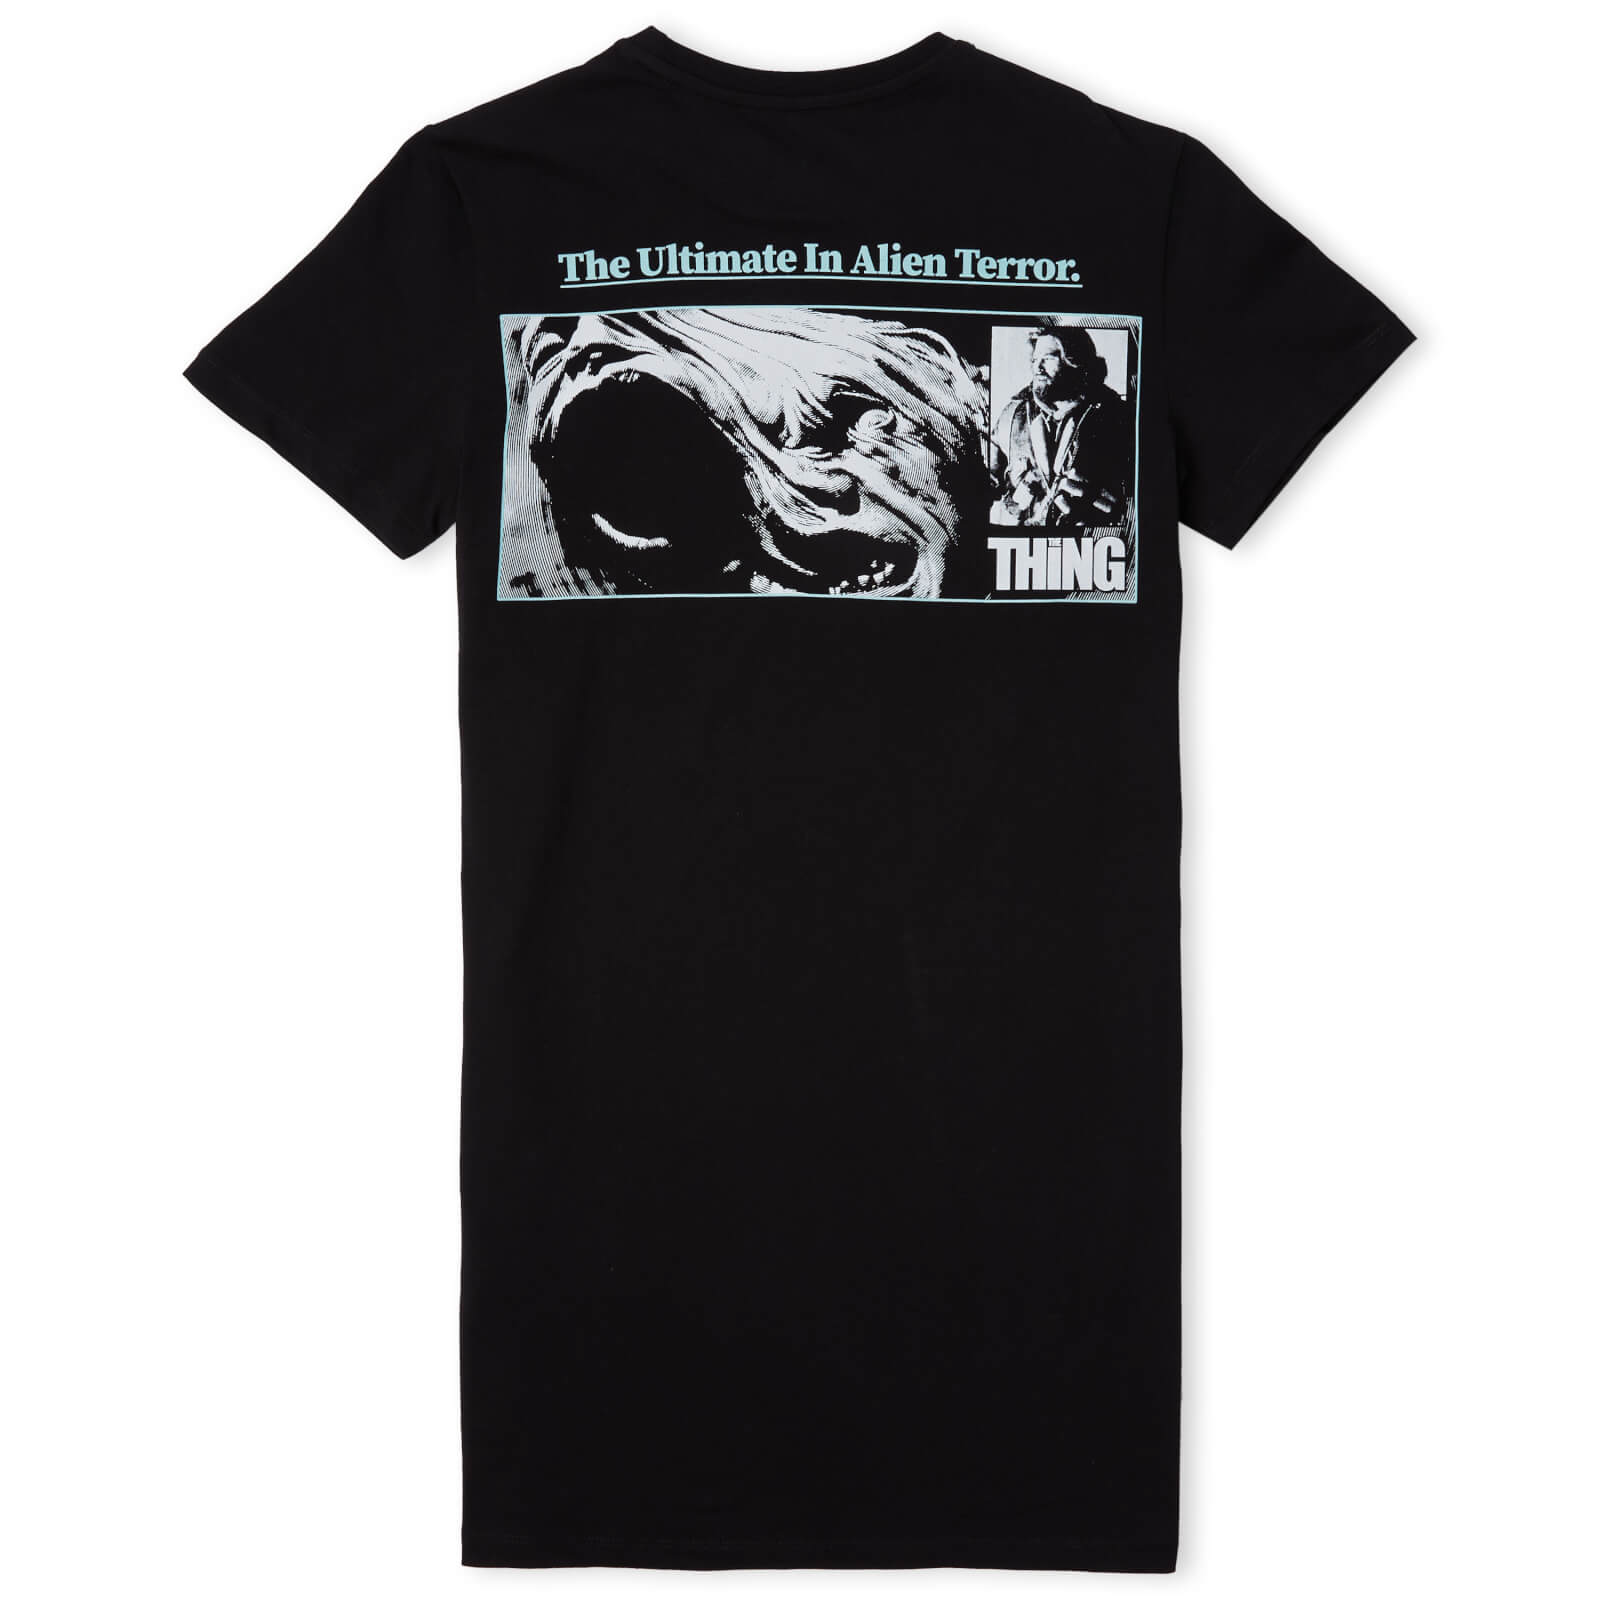 The Thing The Ultimate In Alien Terror Women's T-Shirt Dress - Black - XL - Black